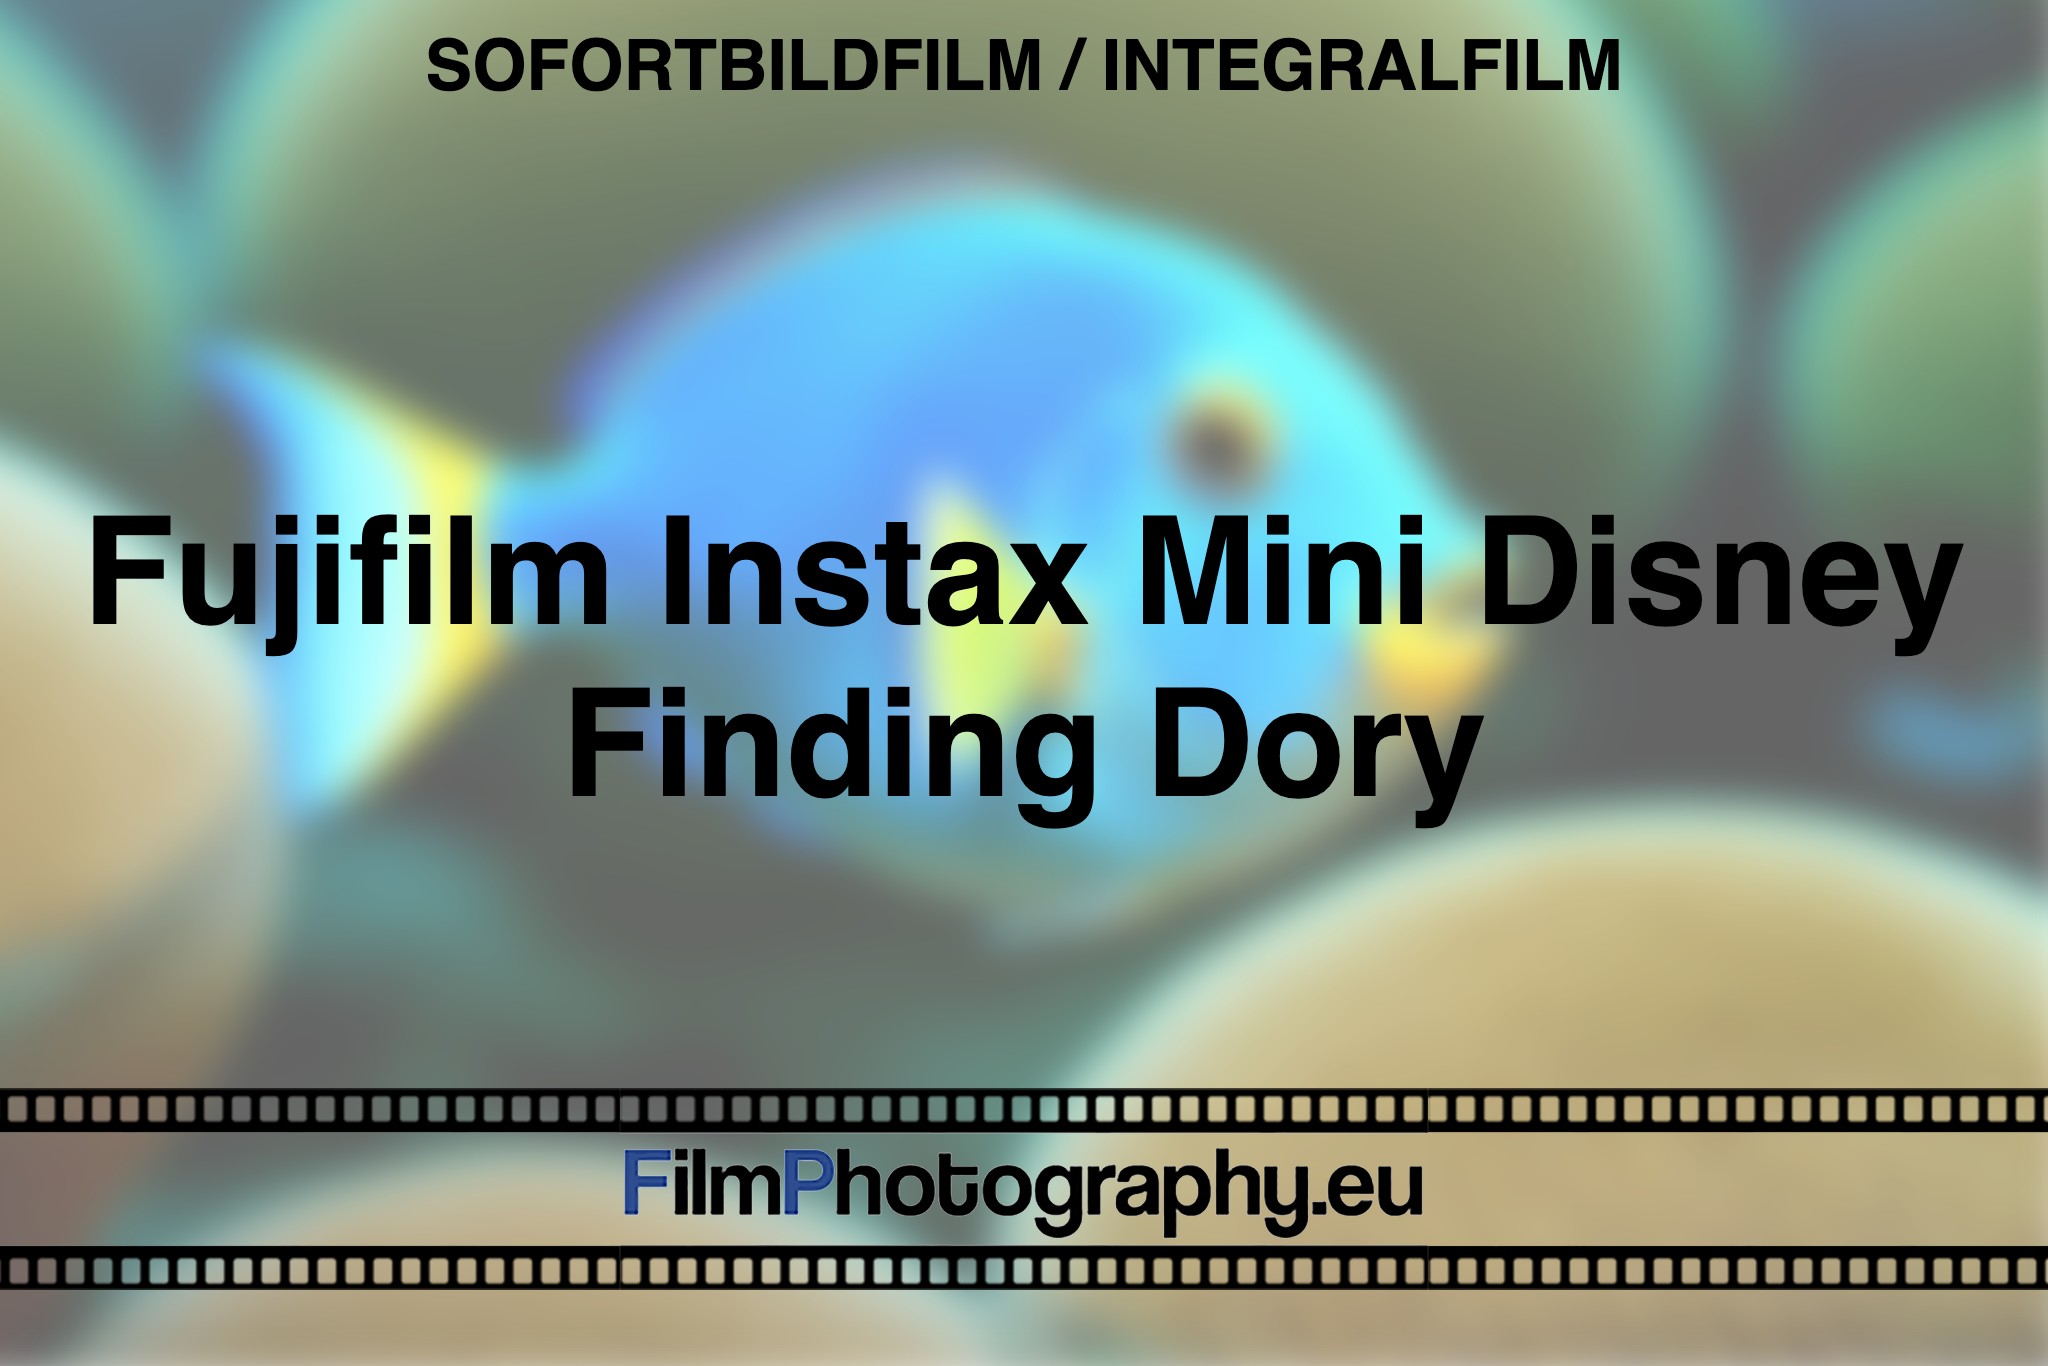 fujifilm-instax-mini-disney-finding-dory-sofortbildfilm-integralfilm-fp-bnv